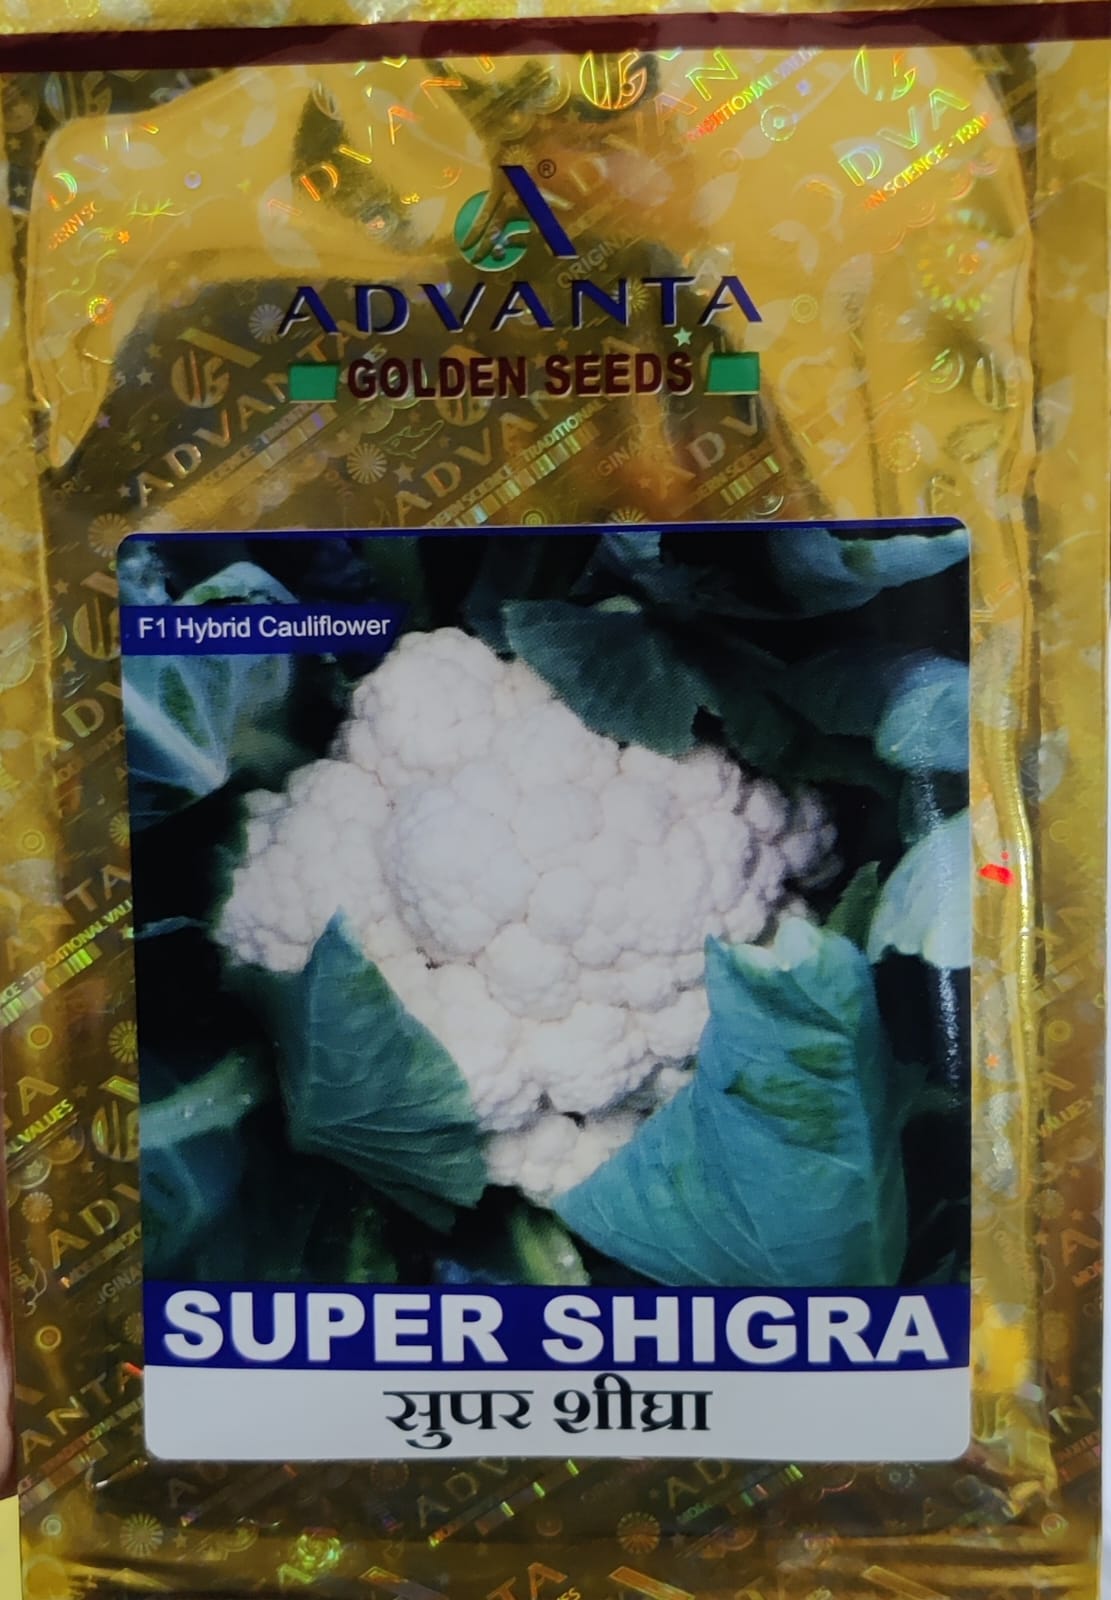 Cauliflower Super Shigra (Advanta Golden Seeds)